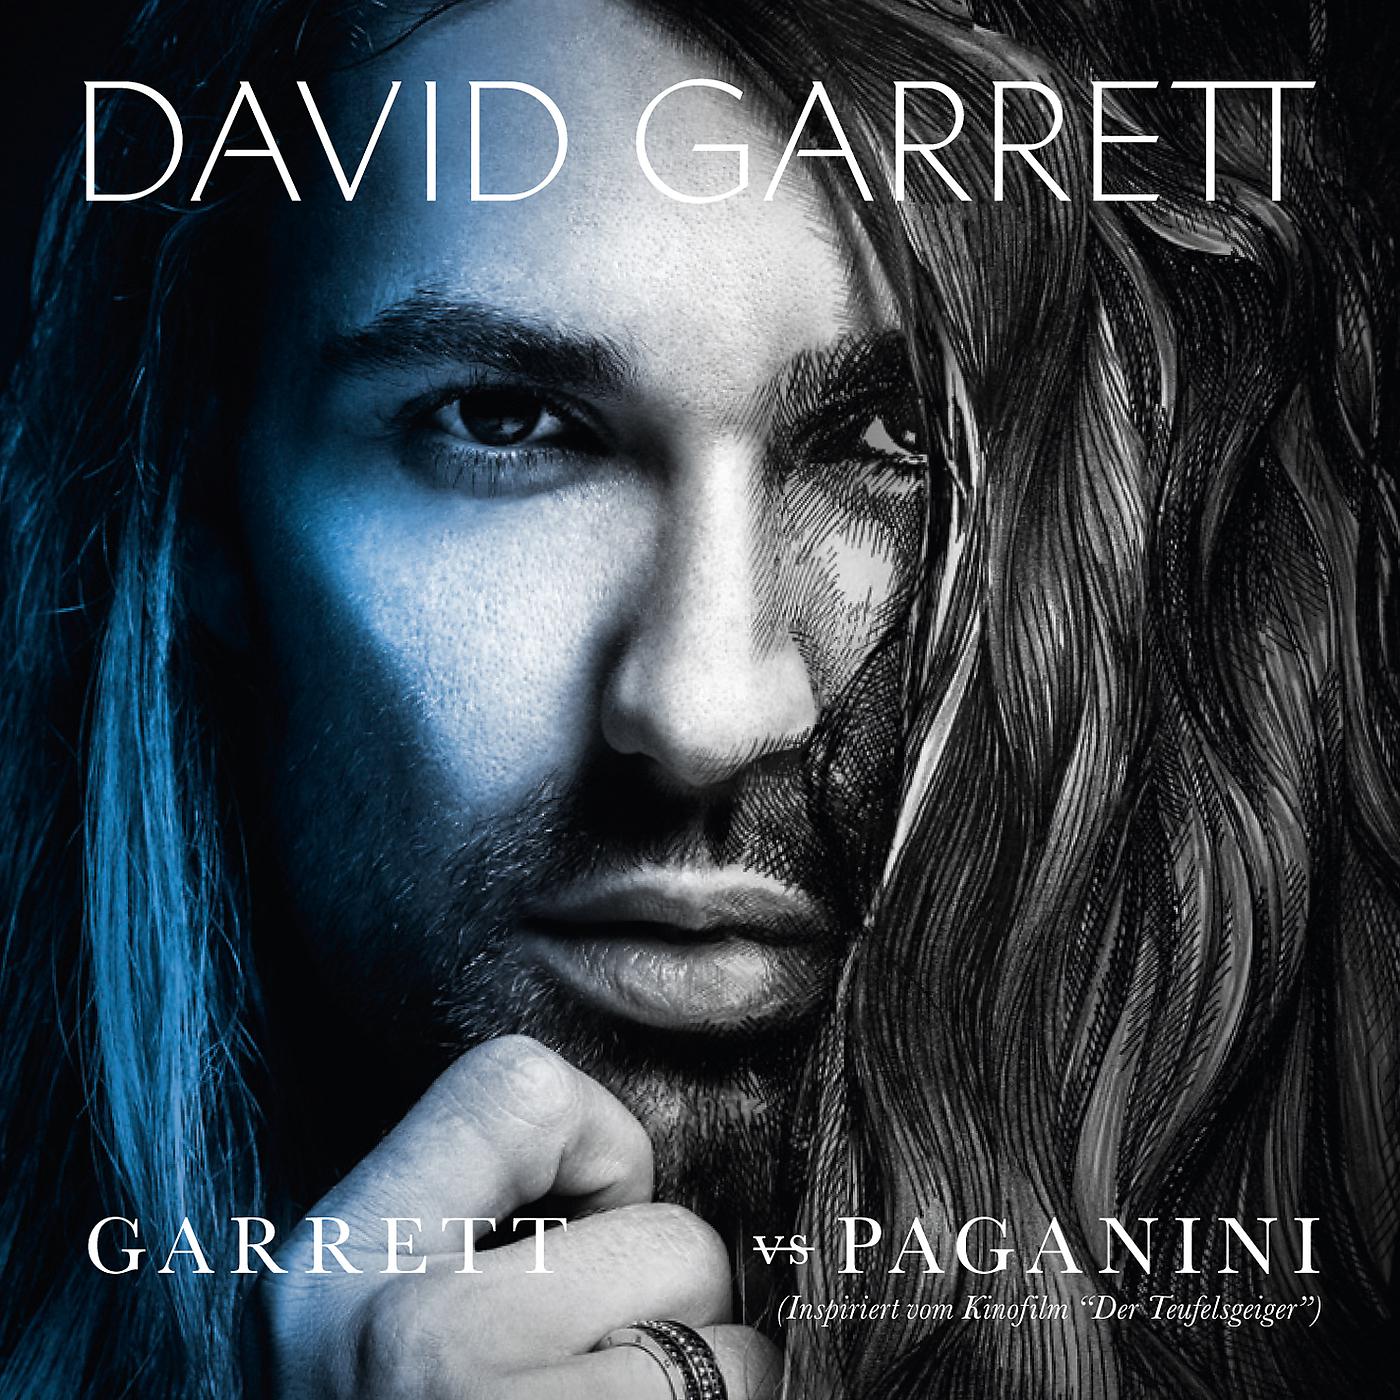 Гарретт паганини. Дэвид Гарретт. Гаррет Паганини. Дэвид Гарретт Паганини. Garrett vs. Paganini.